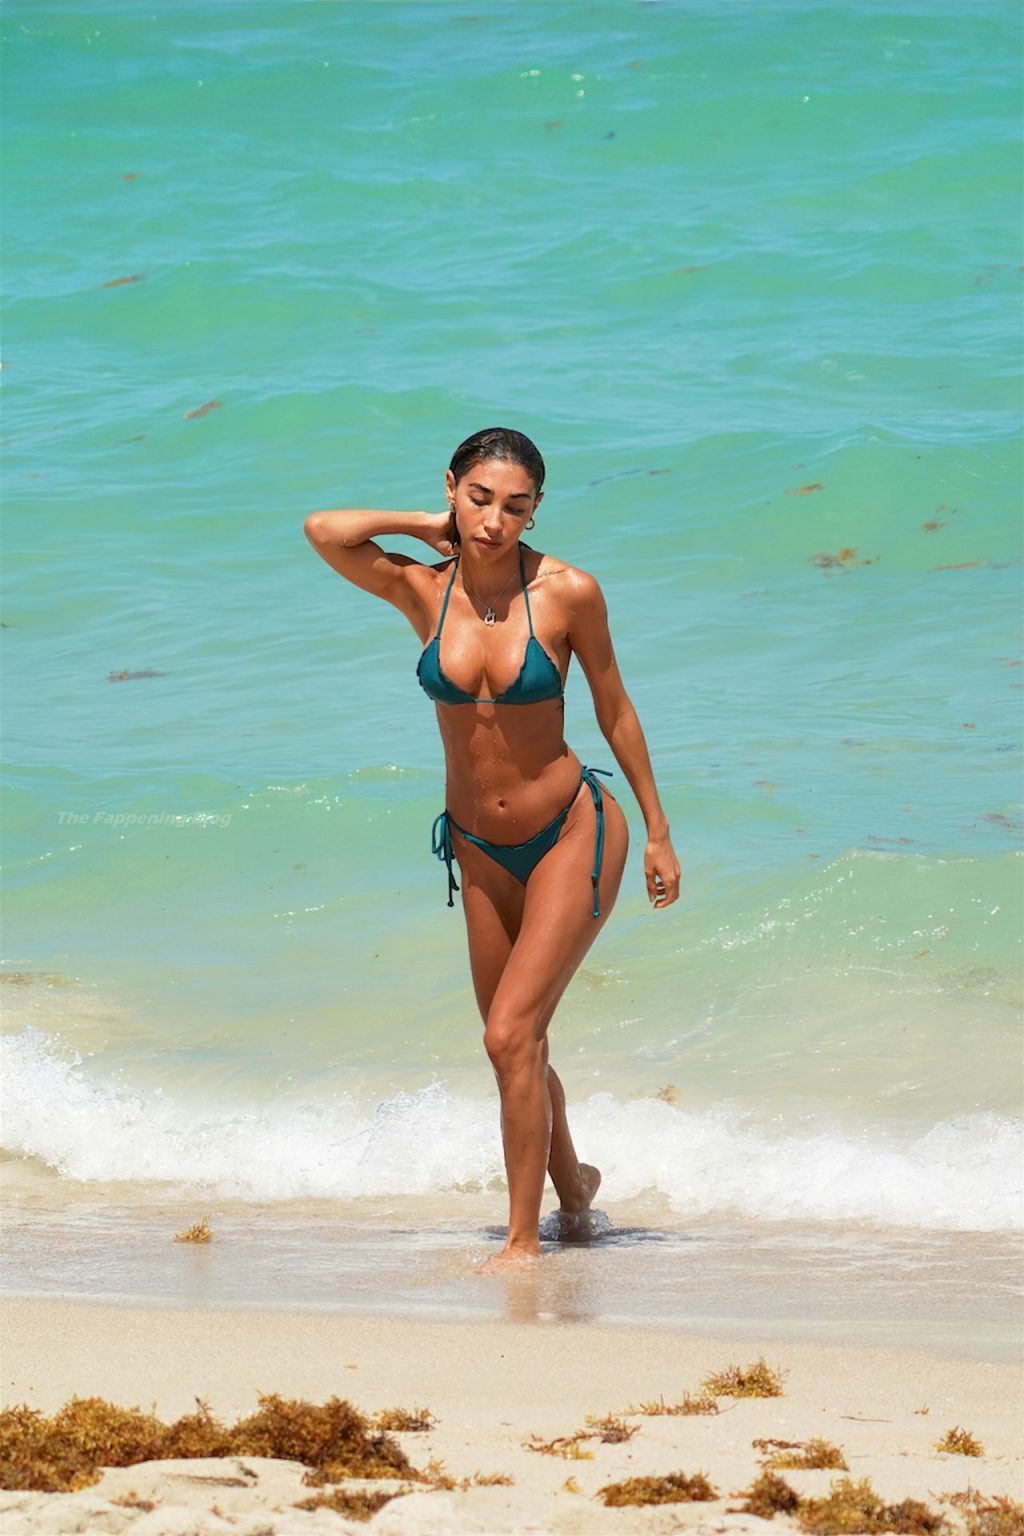 Chantel Jeffries Looks Amazing in a Green Bikini on the Beach in Miami (88 Photos)